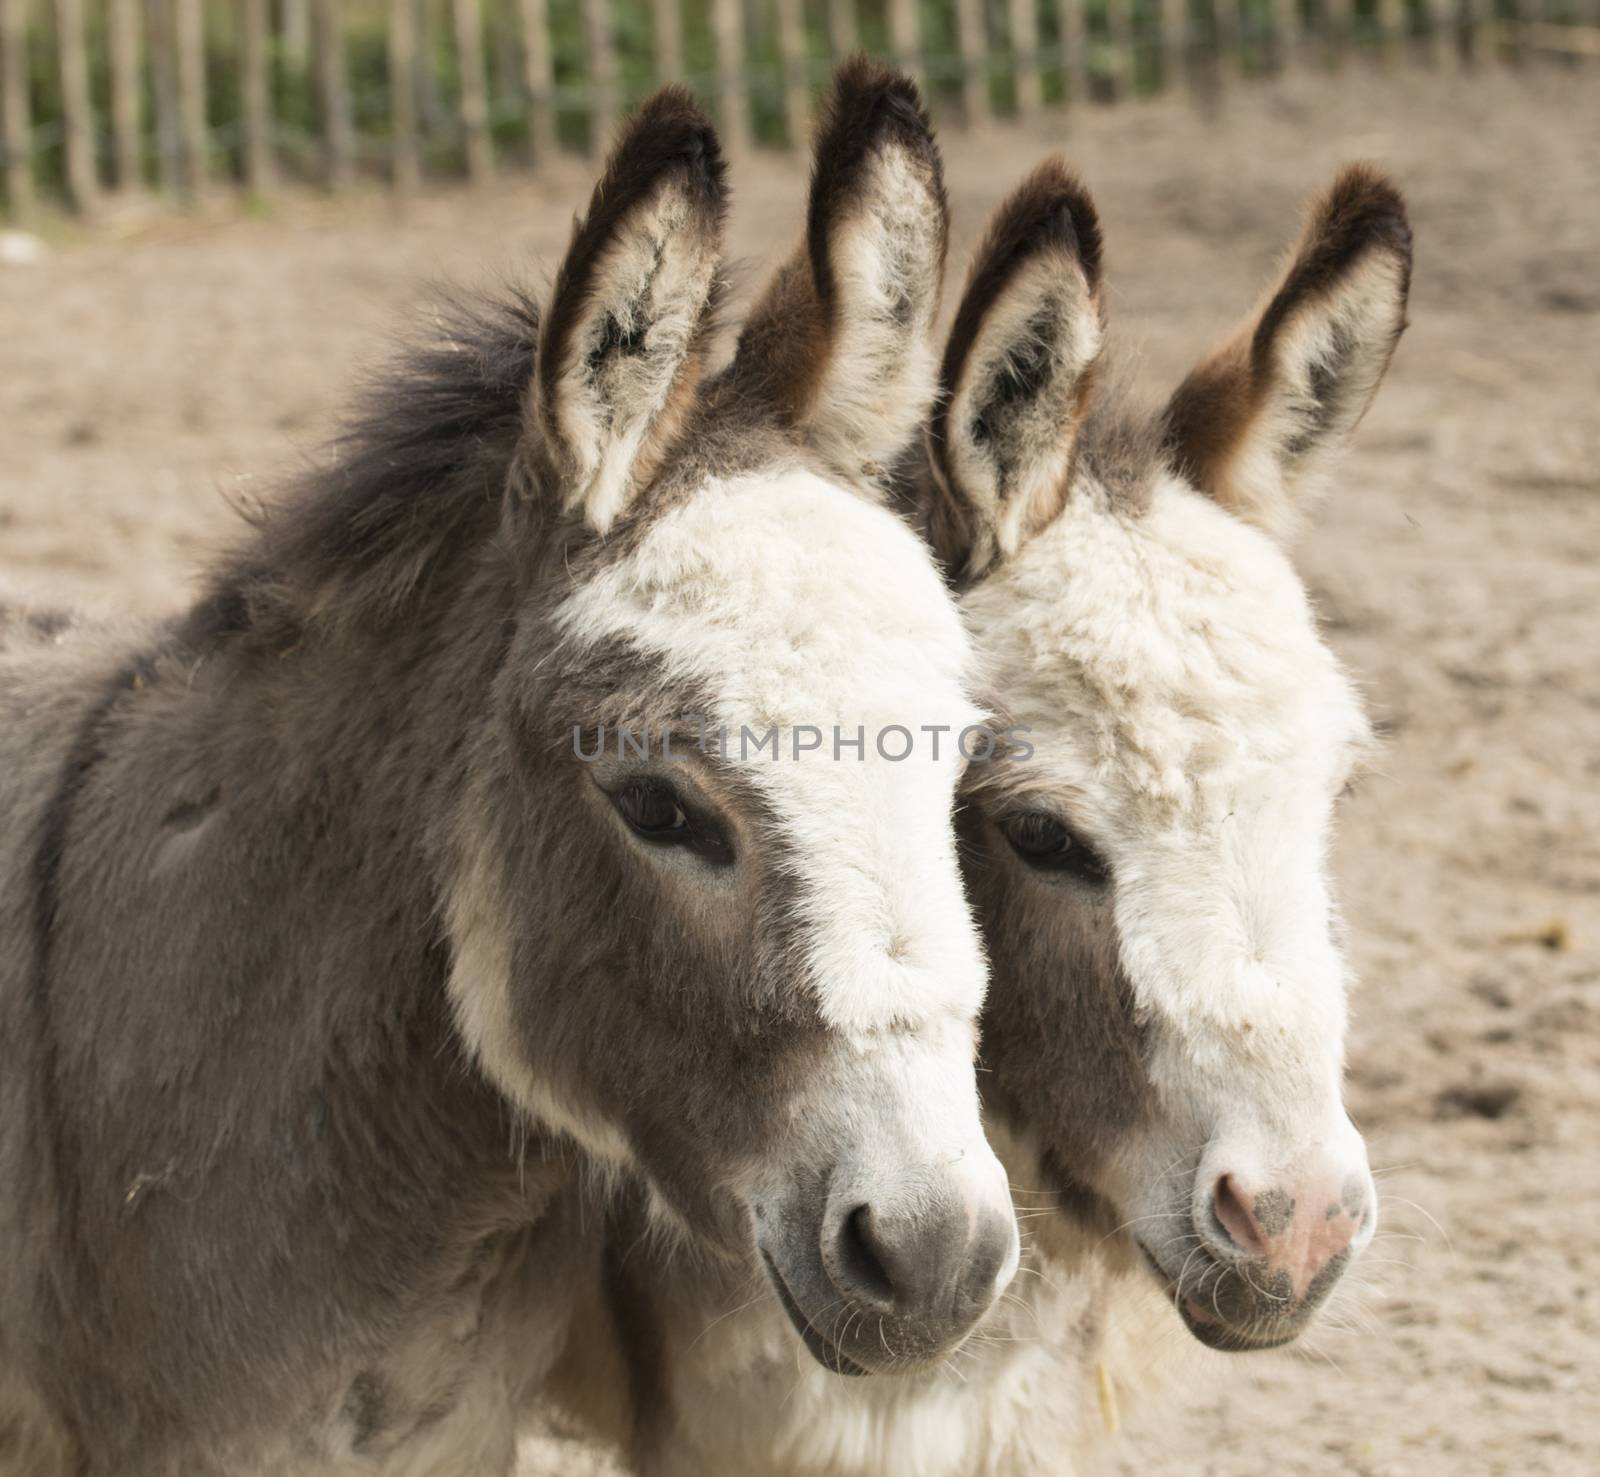 Headshot of two donkeys by avanheertum